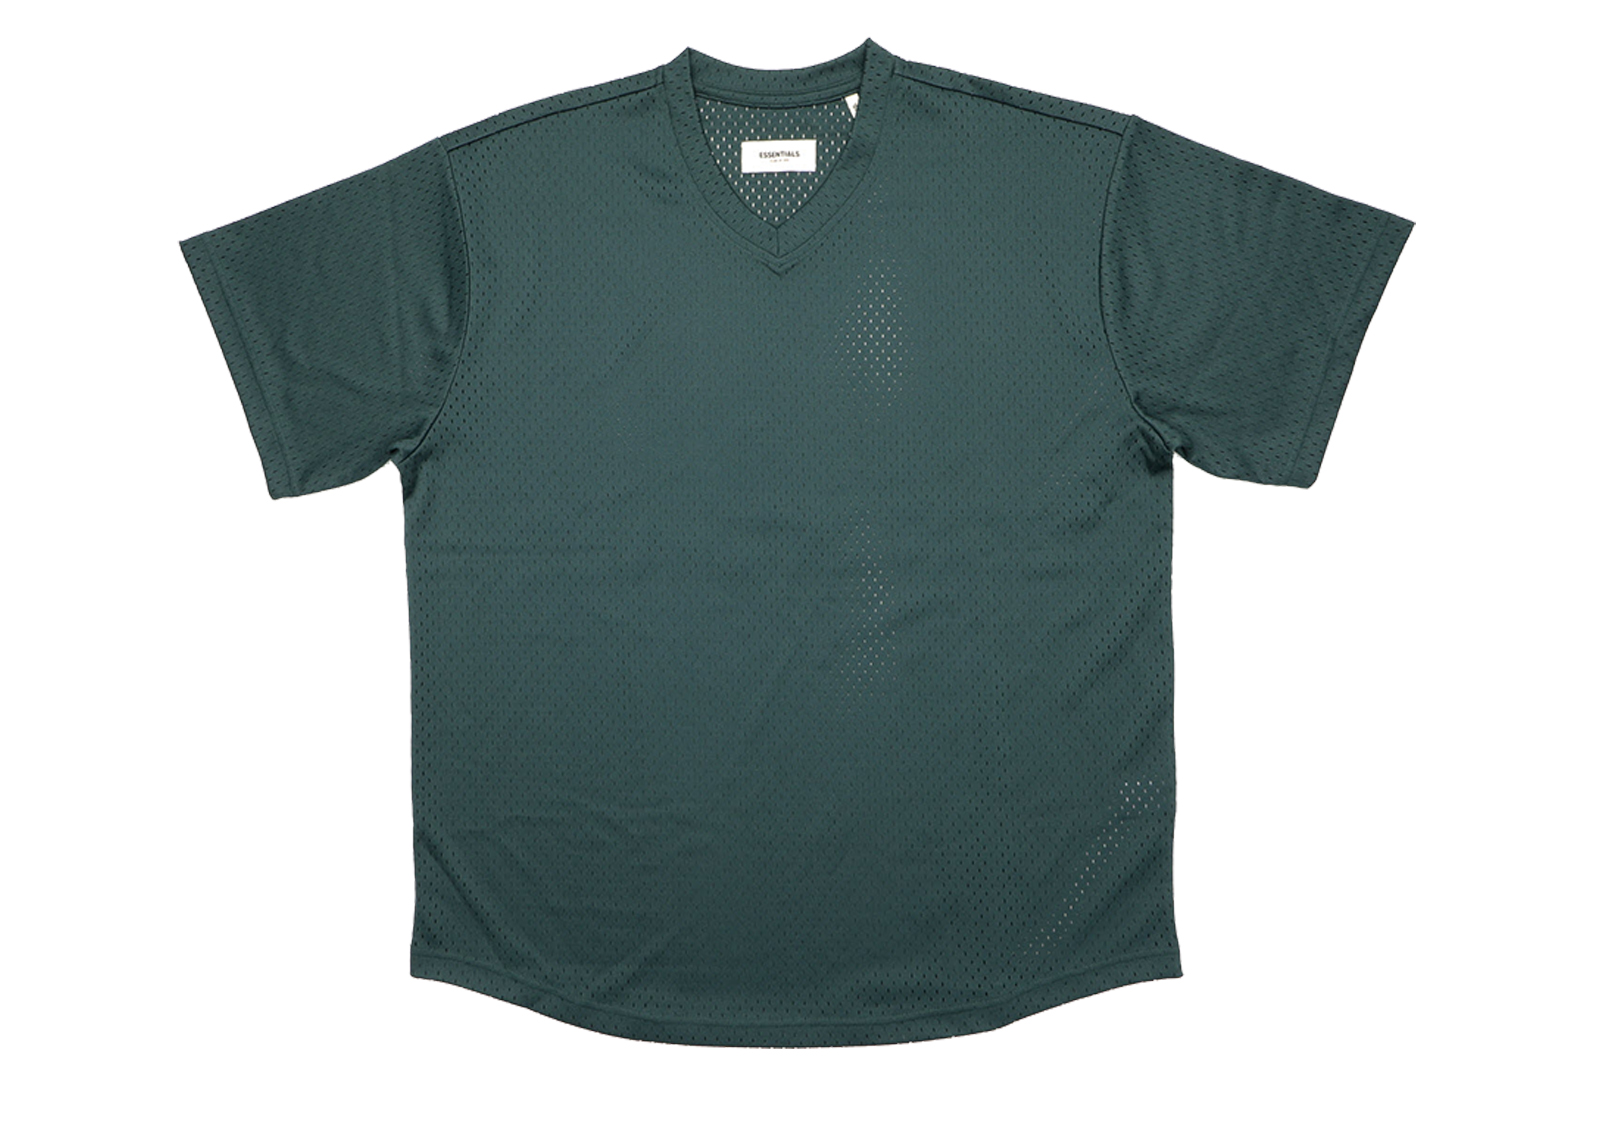 FEAR OF GOD Essentials Mesh T-Shirt Green - FW18 - US